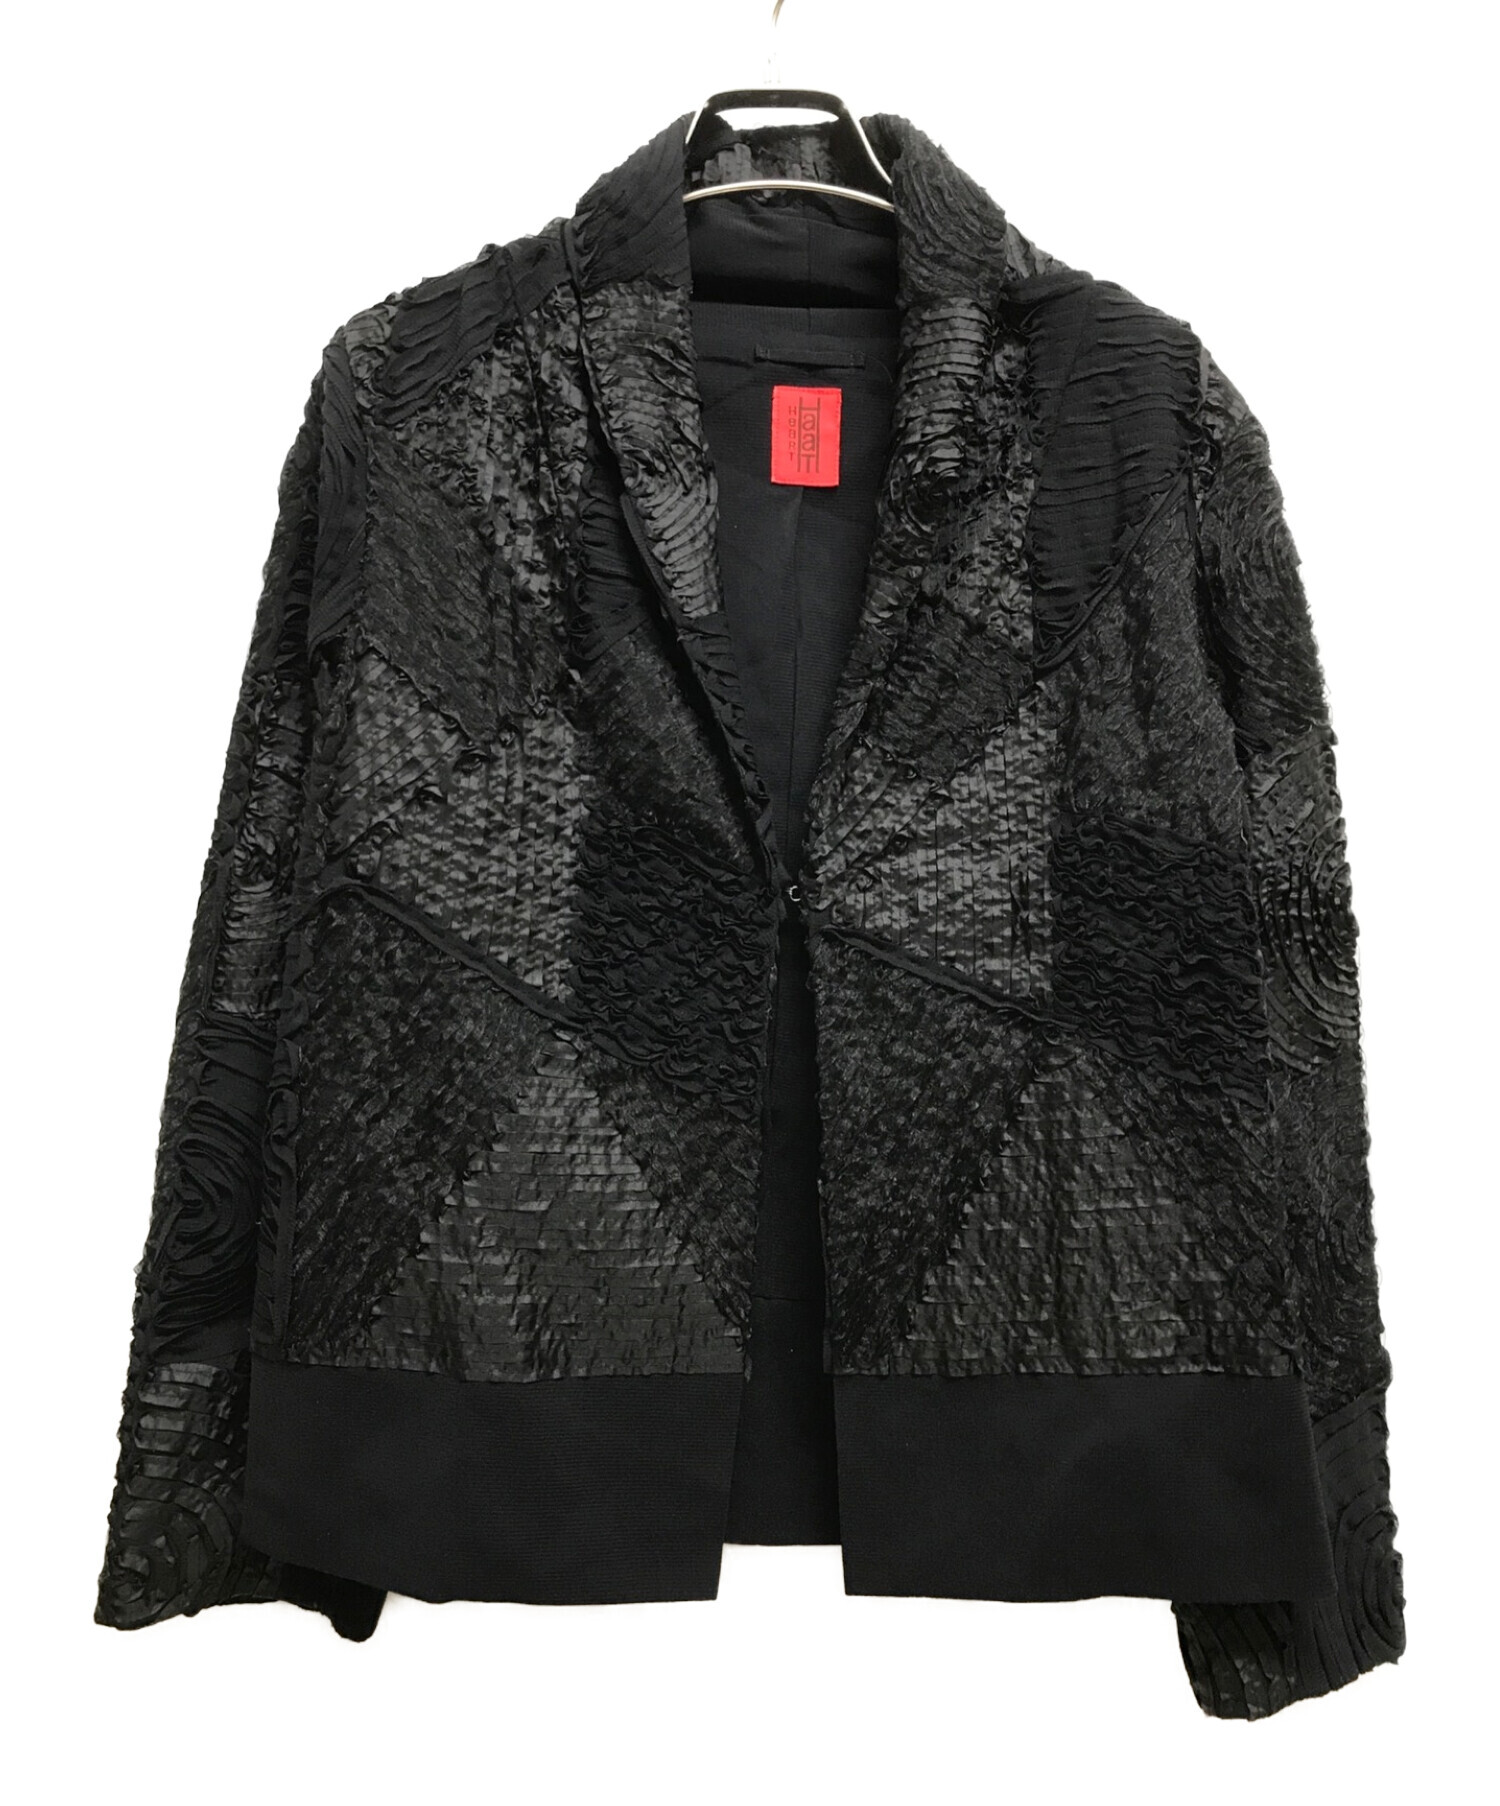 HaaT ISSEY MIYAKE (ハート イッセイ ミヤケ) パターン切替デザインジャケット ブラック サイズ:2